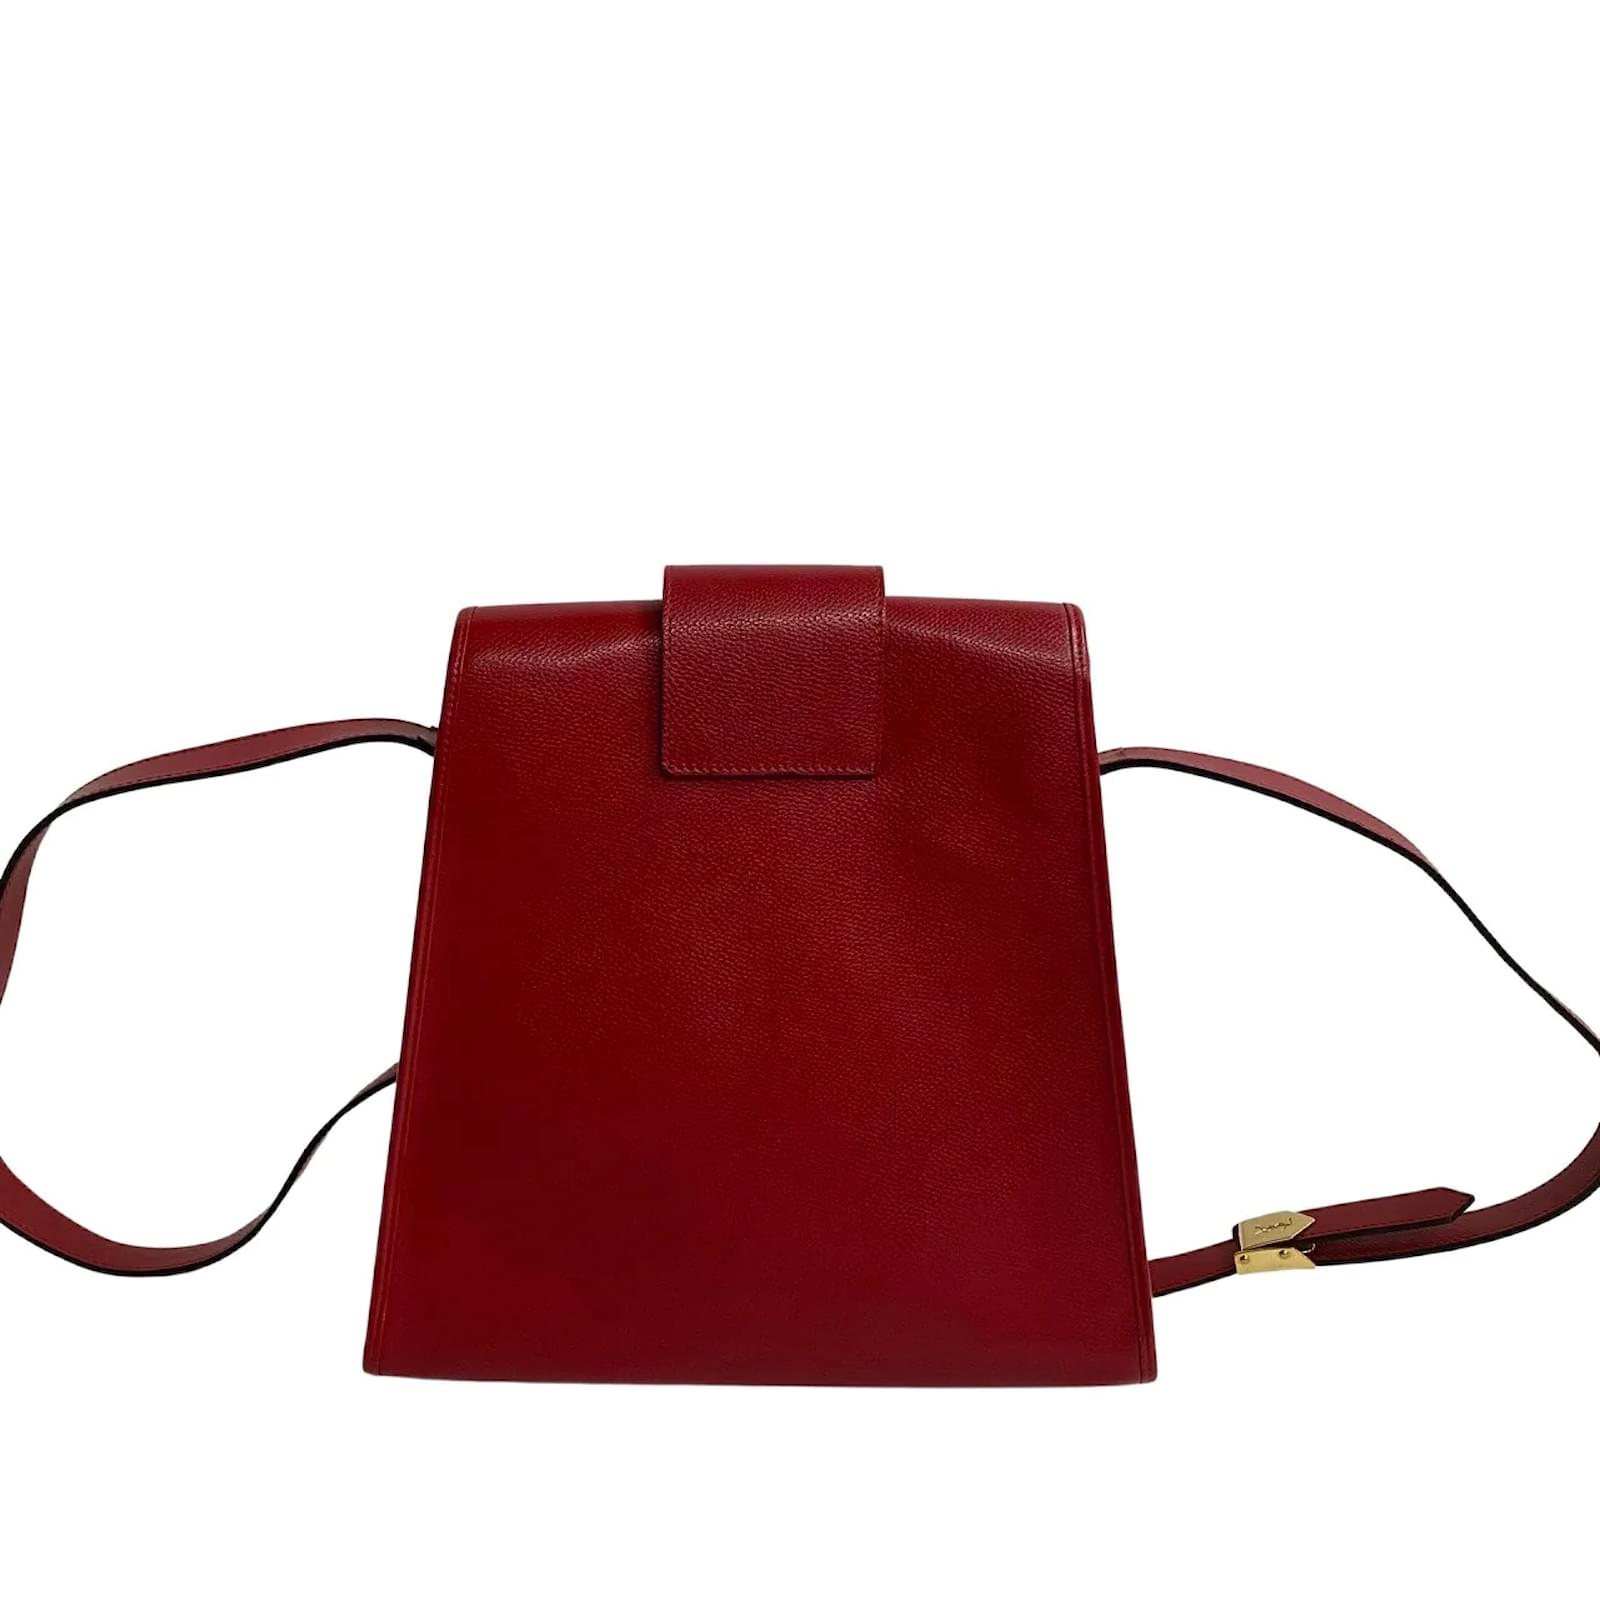 Bags | SAINT LAURENT | NET-A-PORTER | Red bag outfit, Bags, Fashion